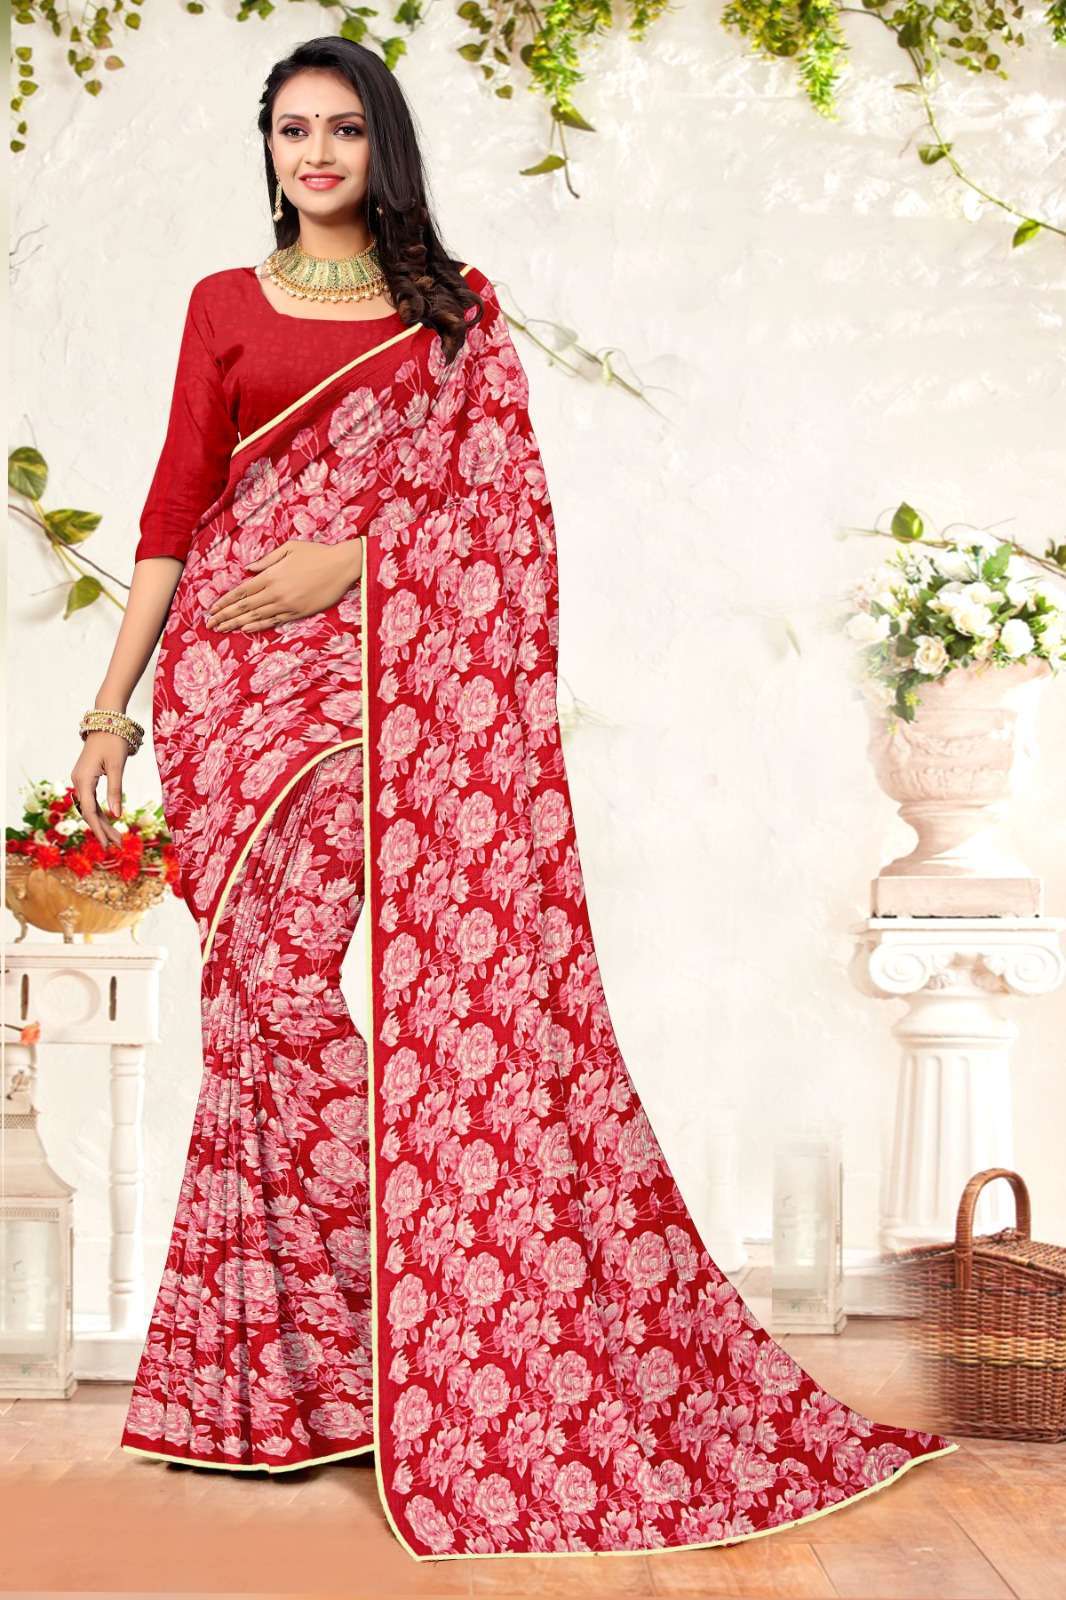 Best wedding saree shops in Jaipur for brides to shine bright - Jaipur Stuff